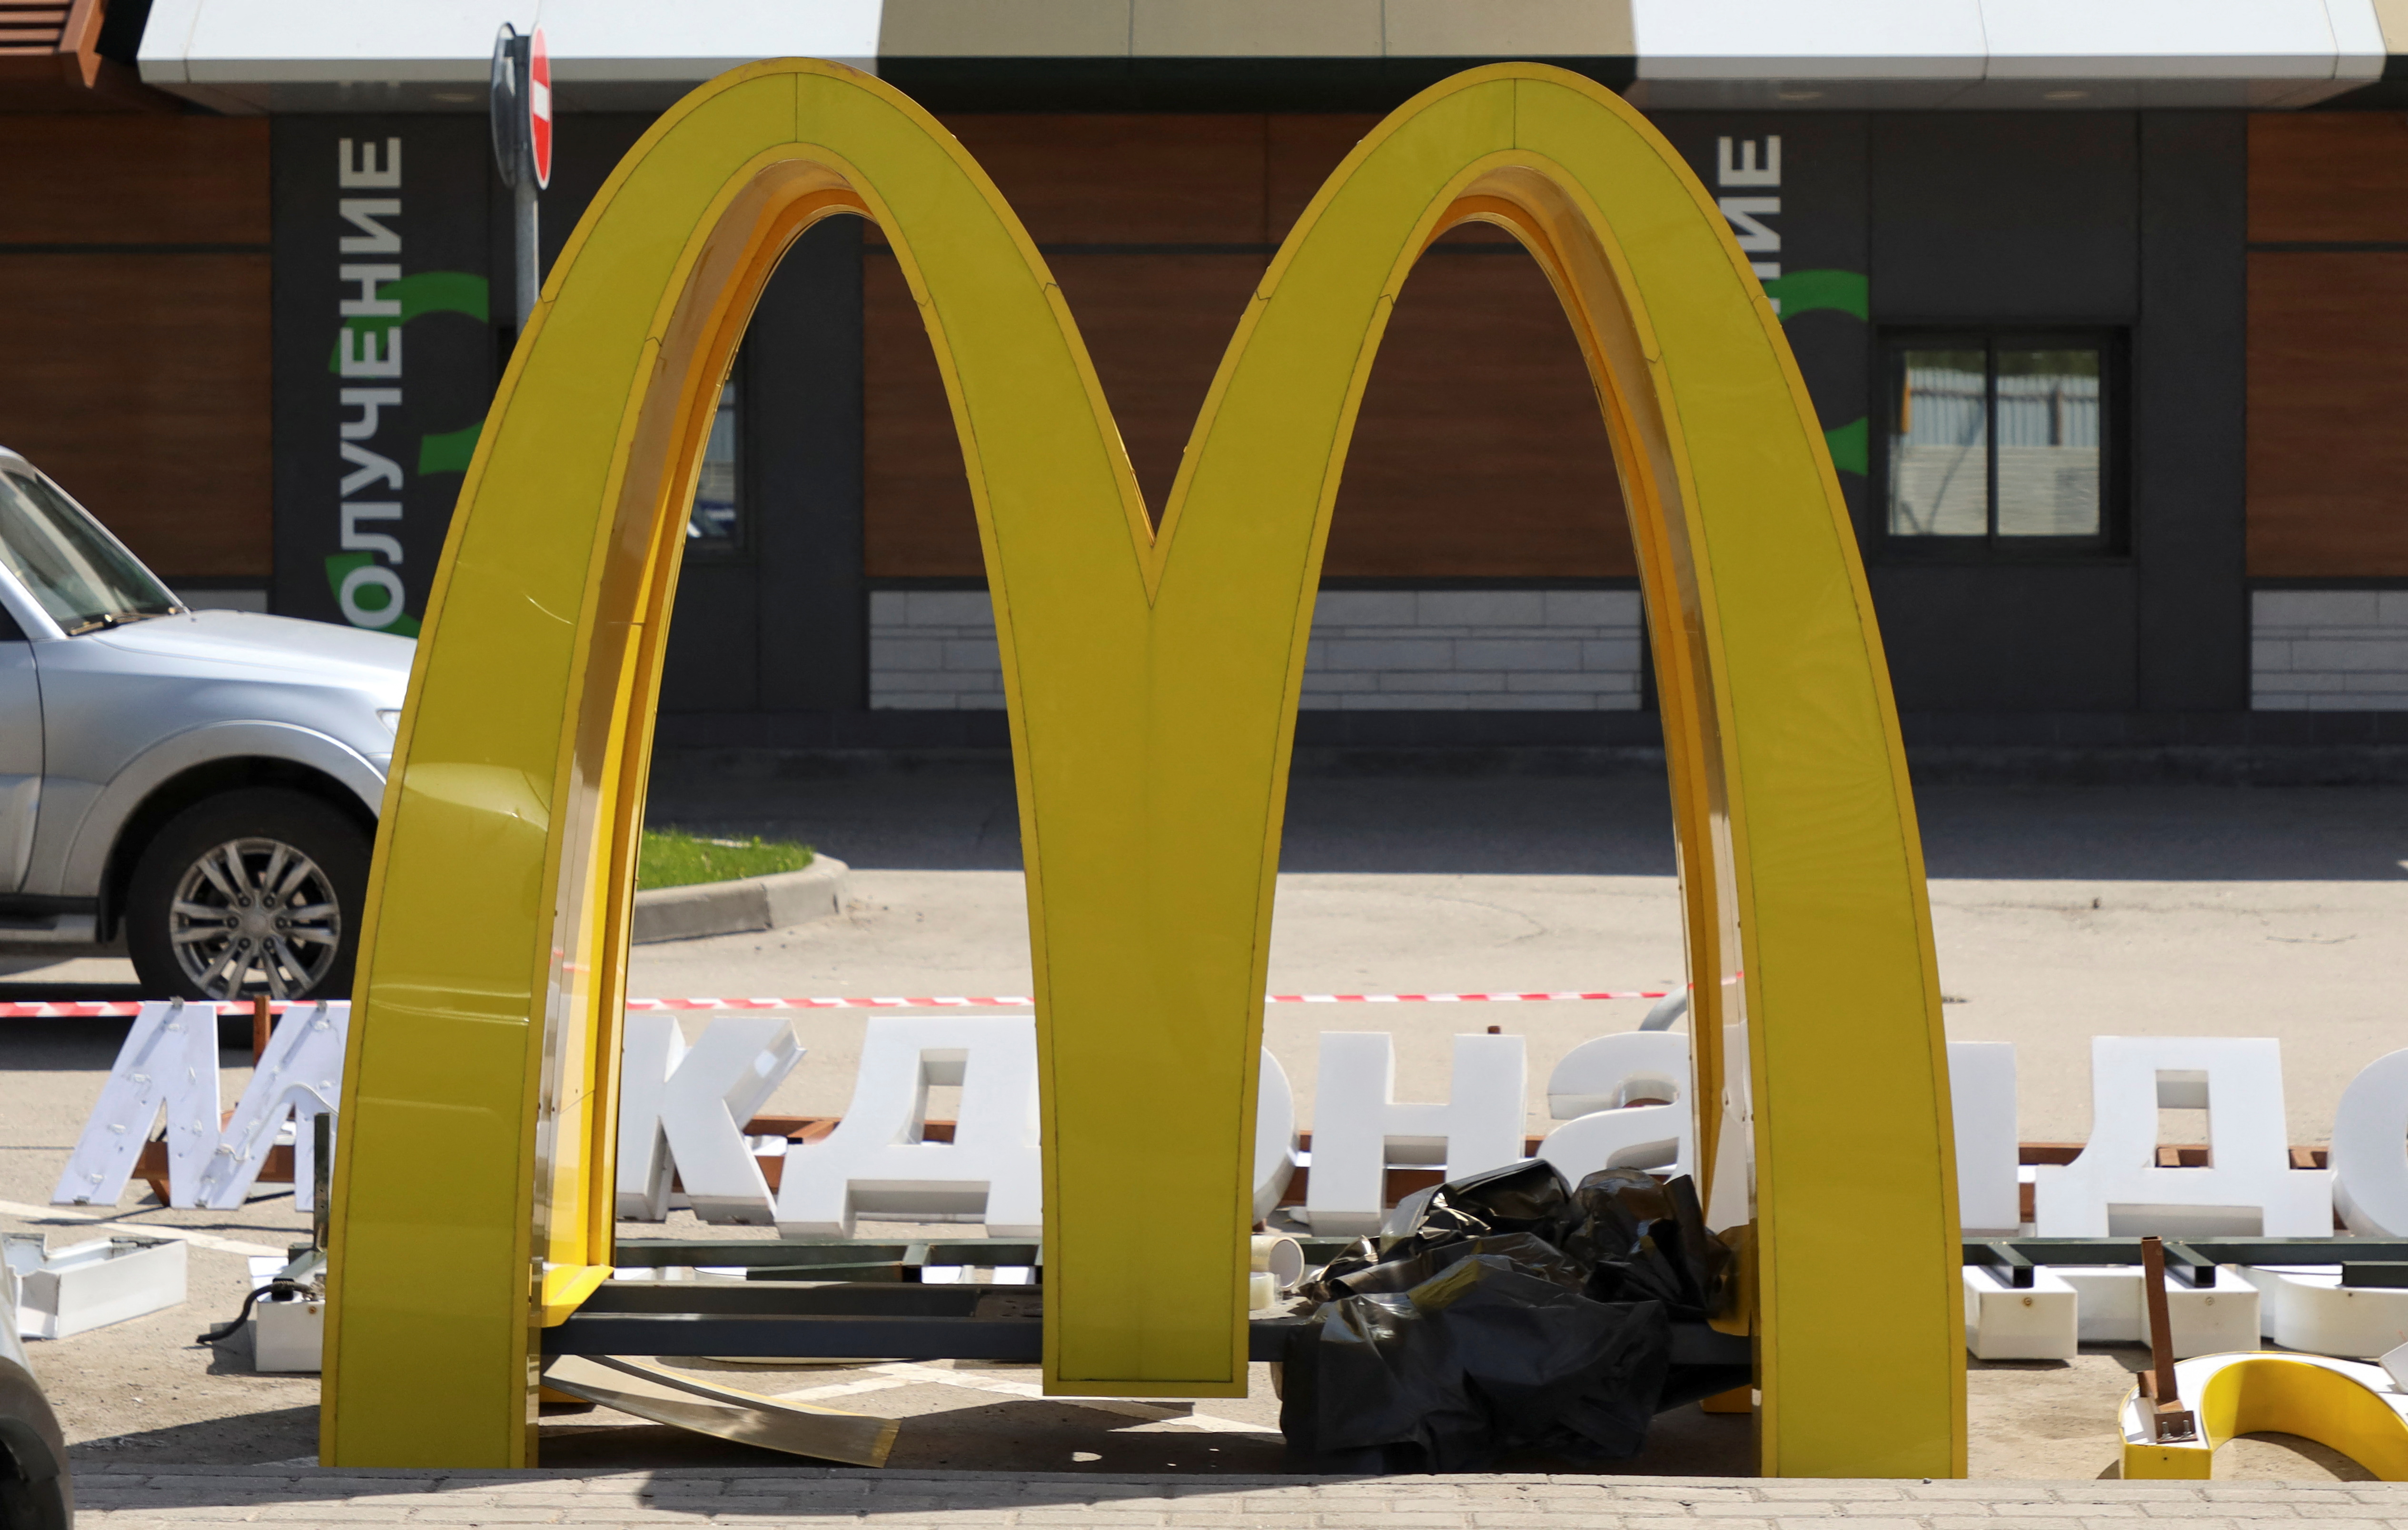 Where McDonald's Got its Arches